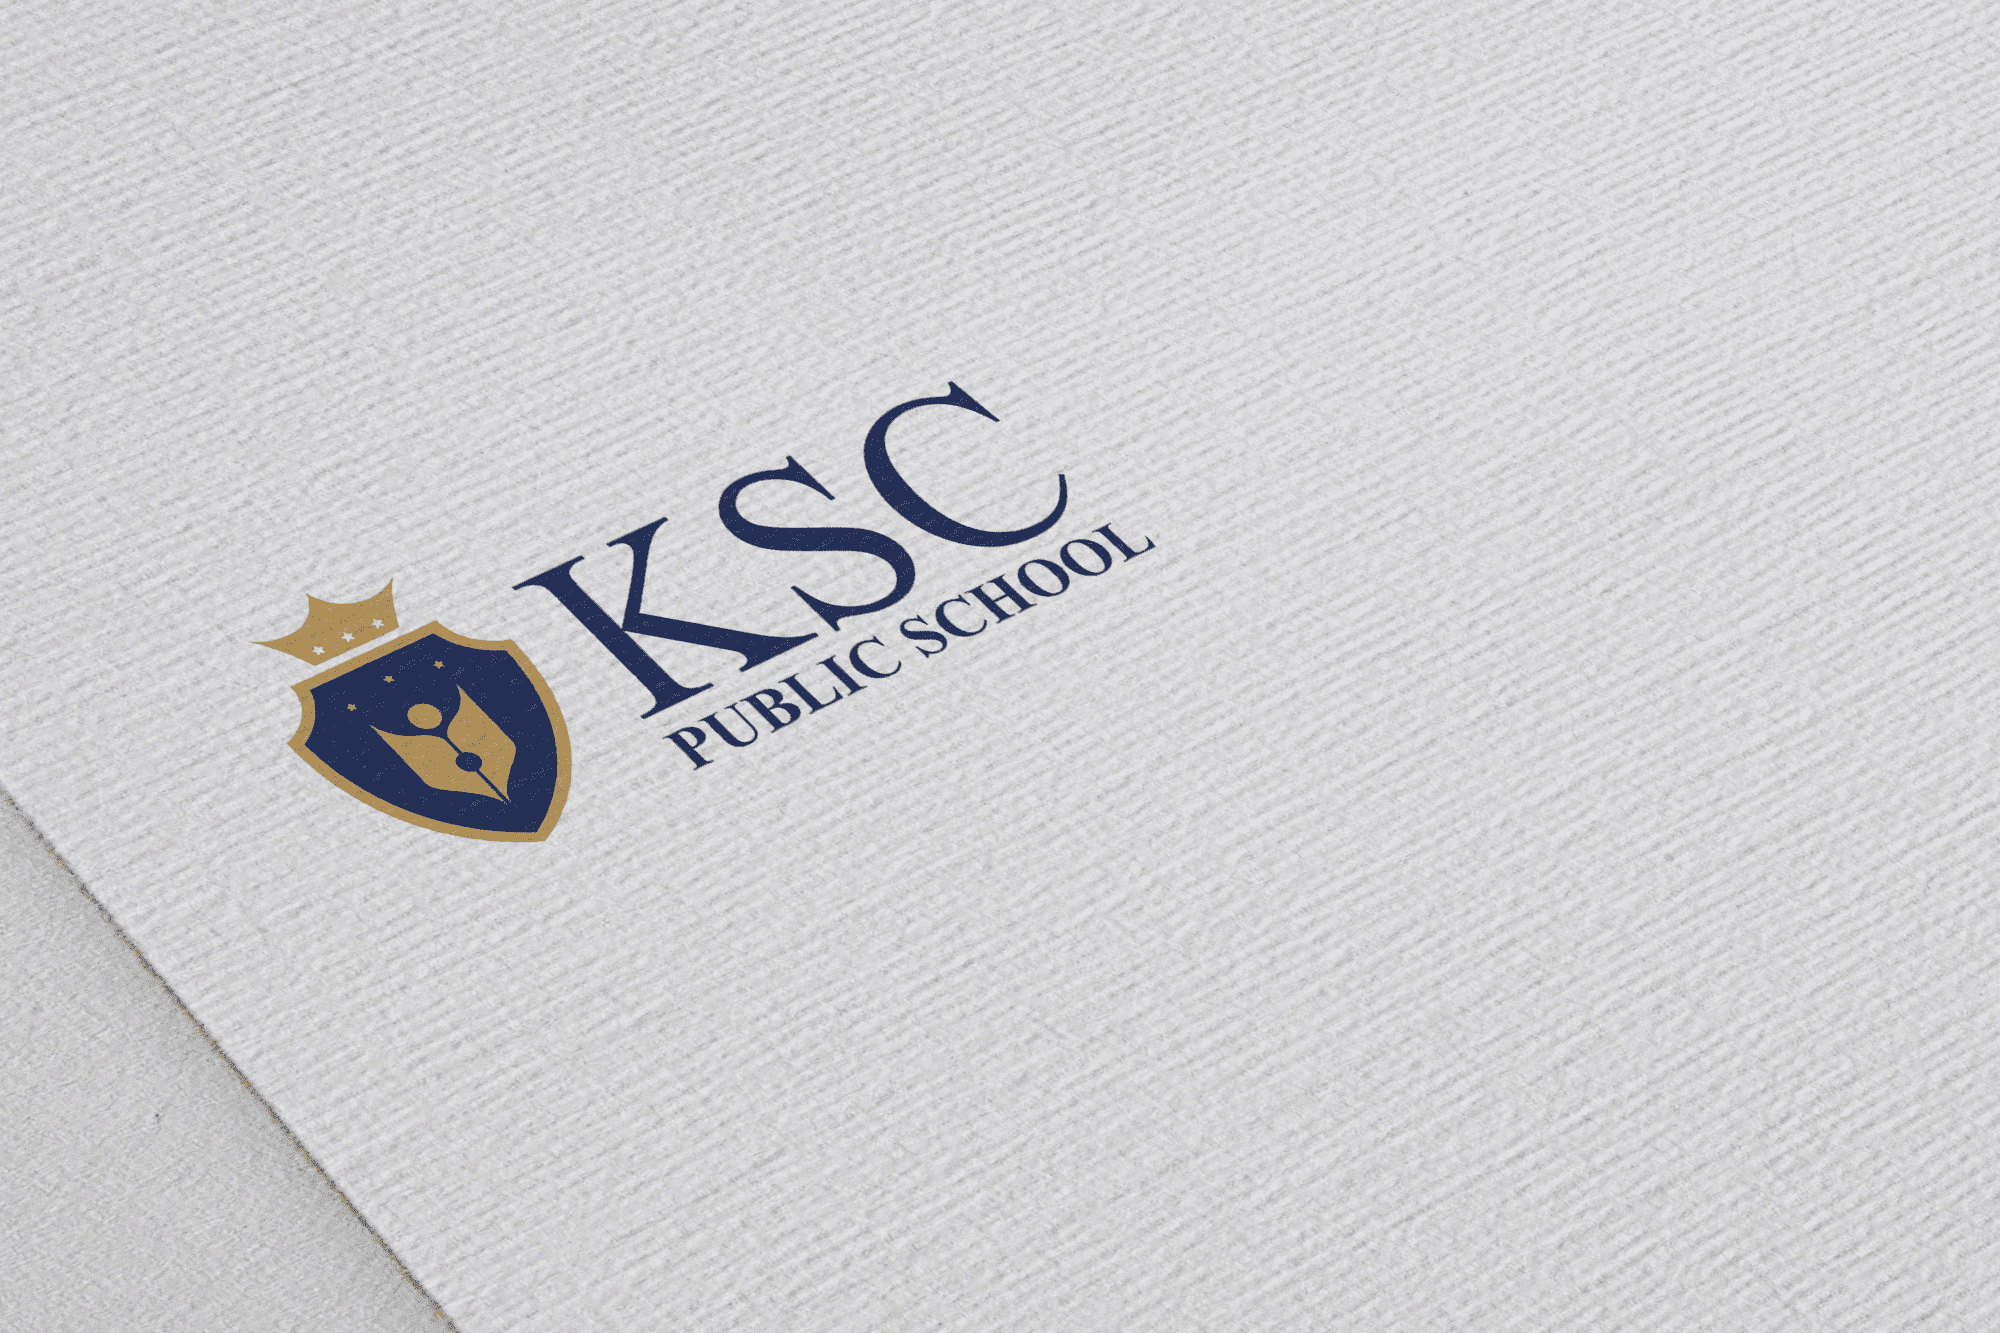 KSC School Letter Head Graphic Design, Branding Packaging Design in Erode by Creative Prints thecreativeprints